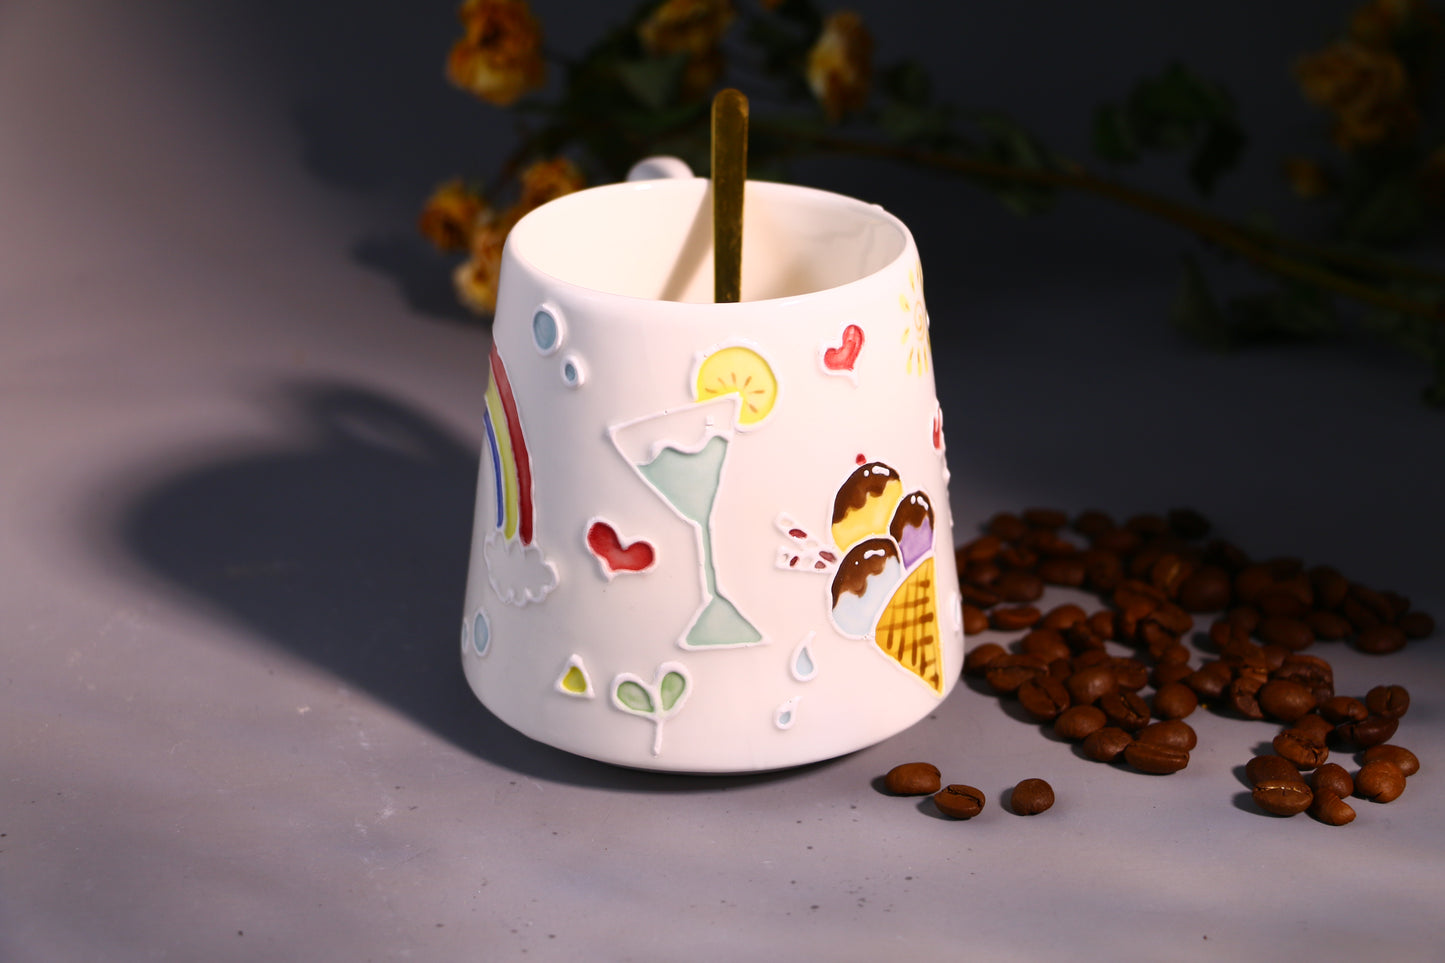 Ice Cream & Sun Umbrella Hand-Painted Ceramic Mugs, Personalized Pottery Mug for Gifts